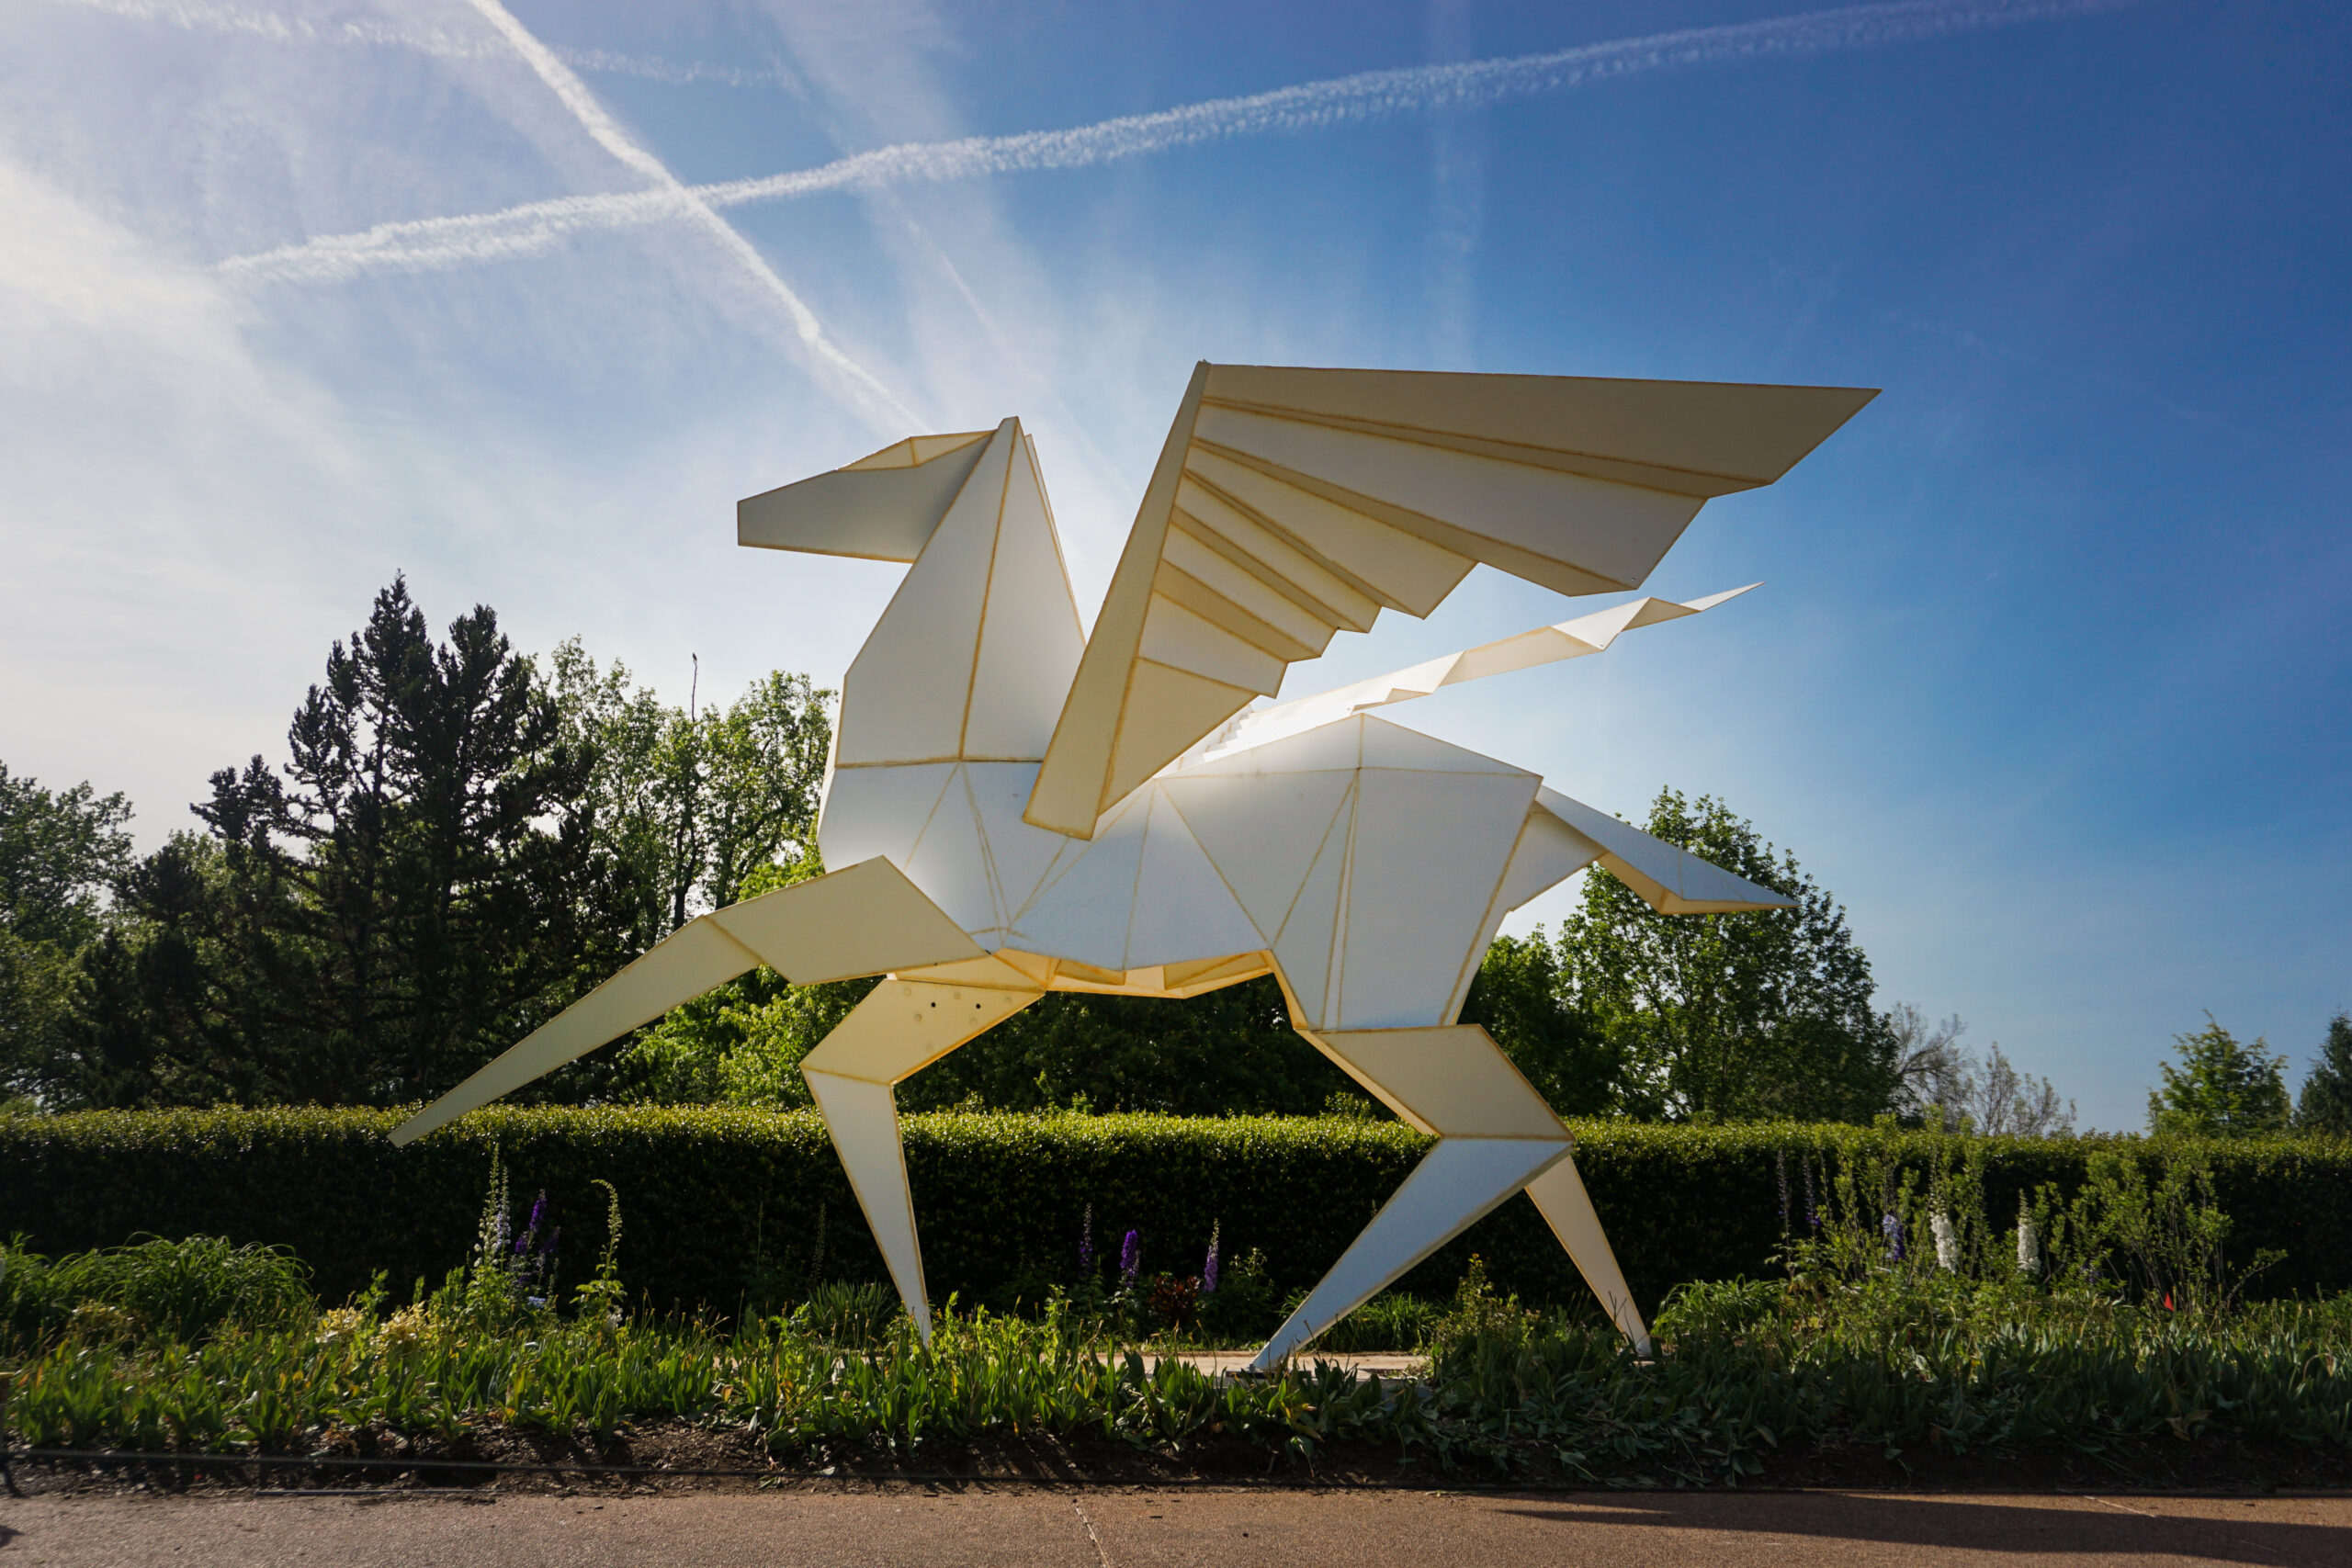 Larger-than-life sculptures on view in Atlanta Botanical Garden exhibit ‘Origami in the Garden’ – WABE